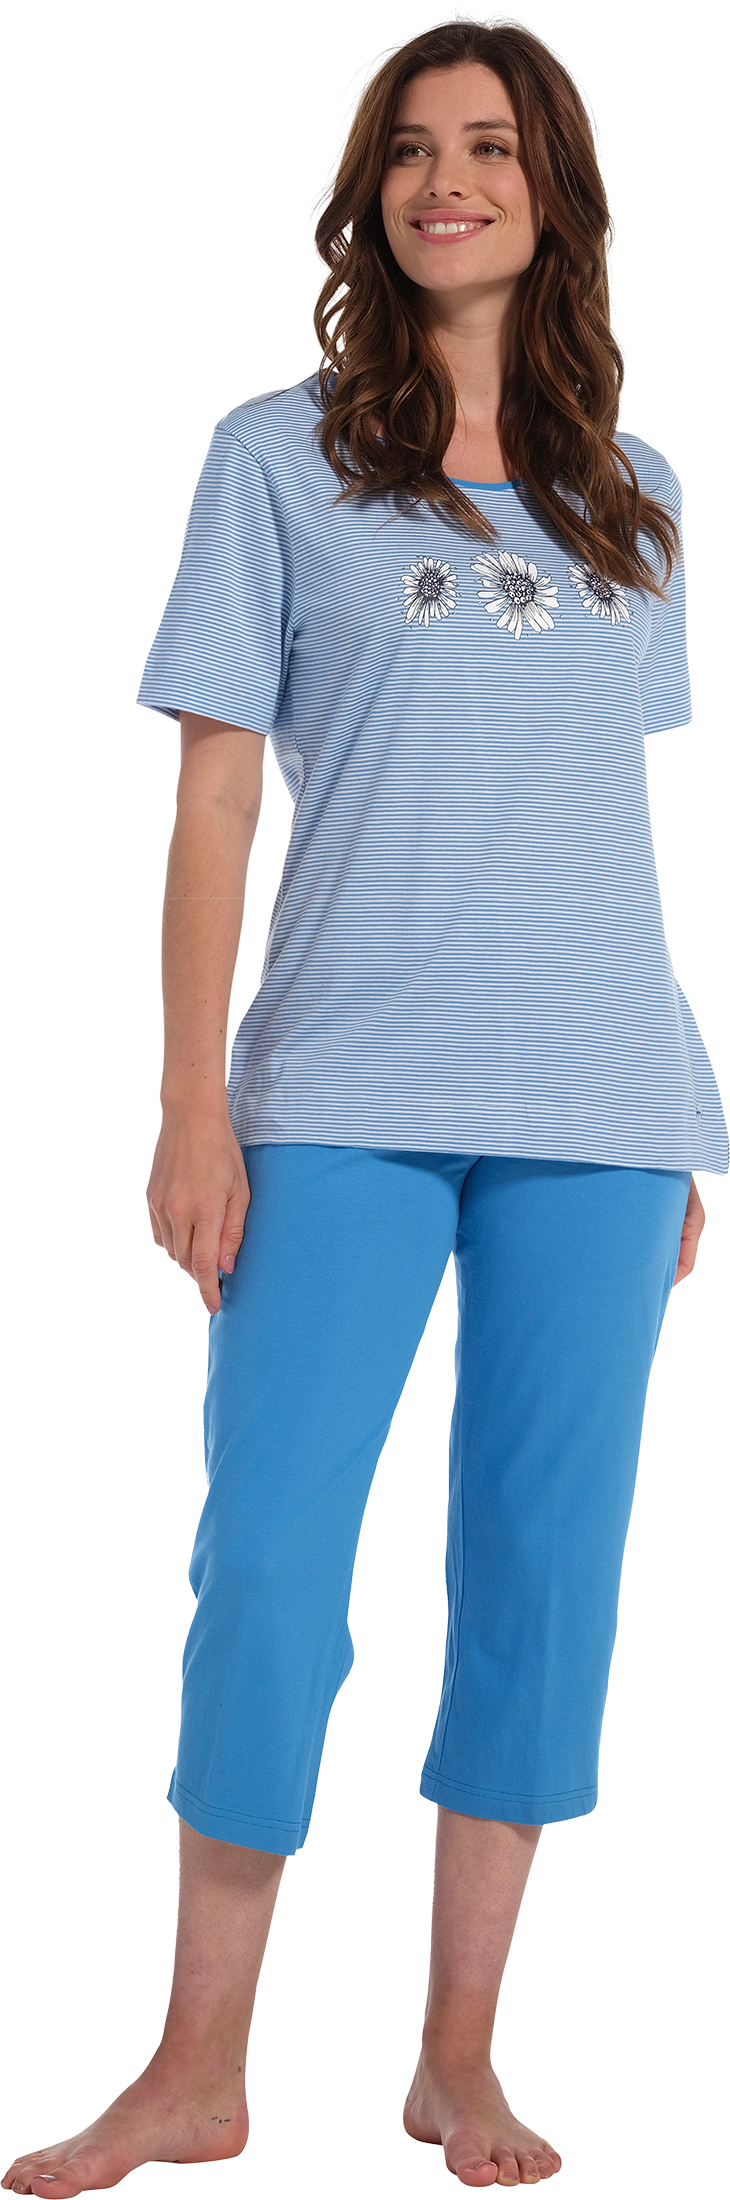 Pastunette dames pyjama capri 20231-130-2 - Blauw - 40